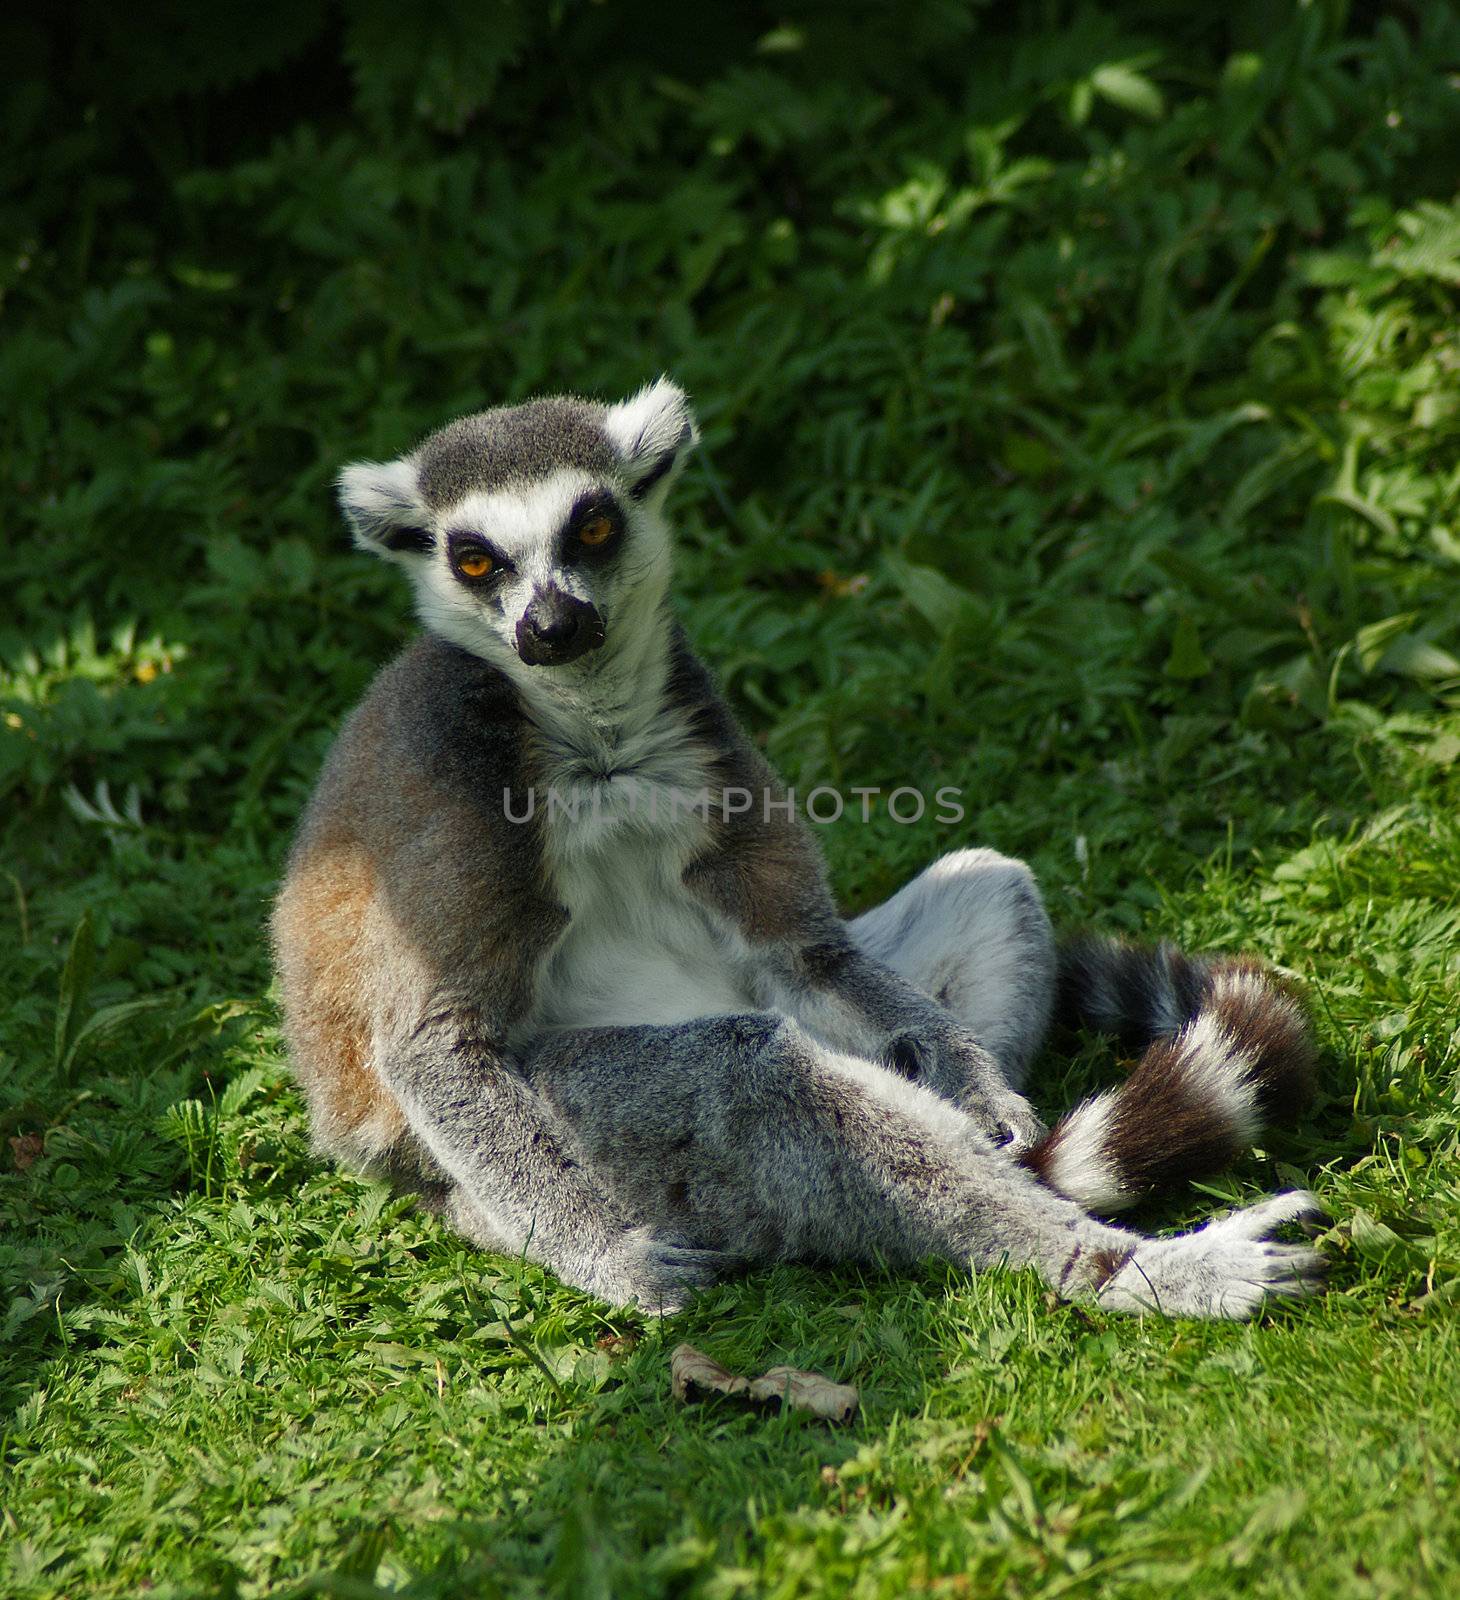 Tired lemur sitting on the ground